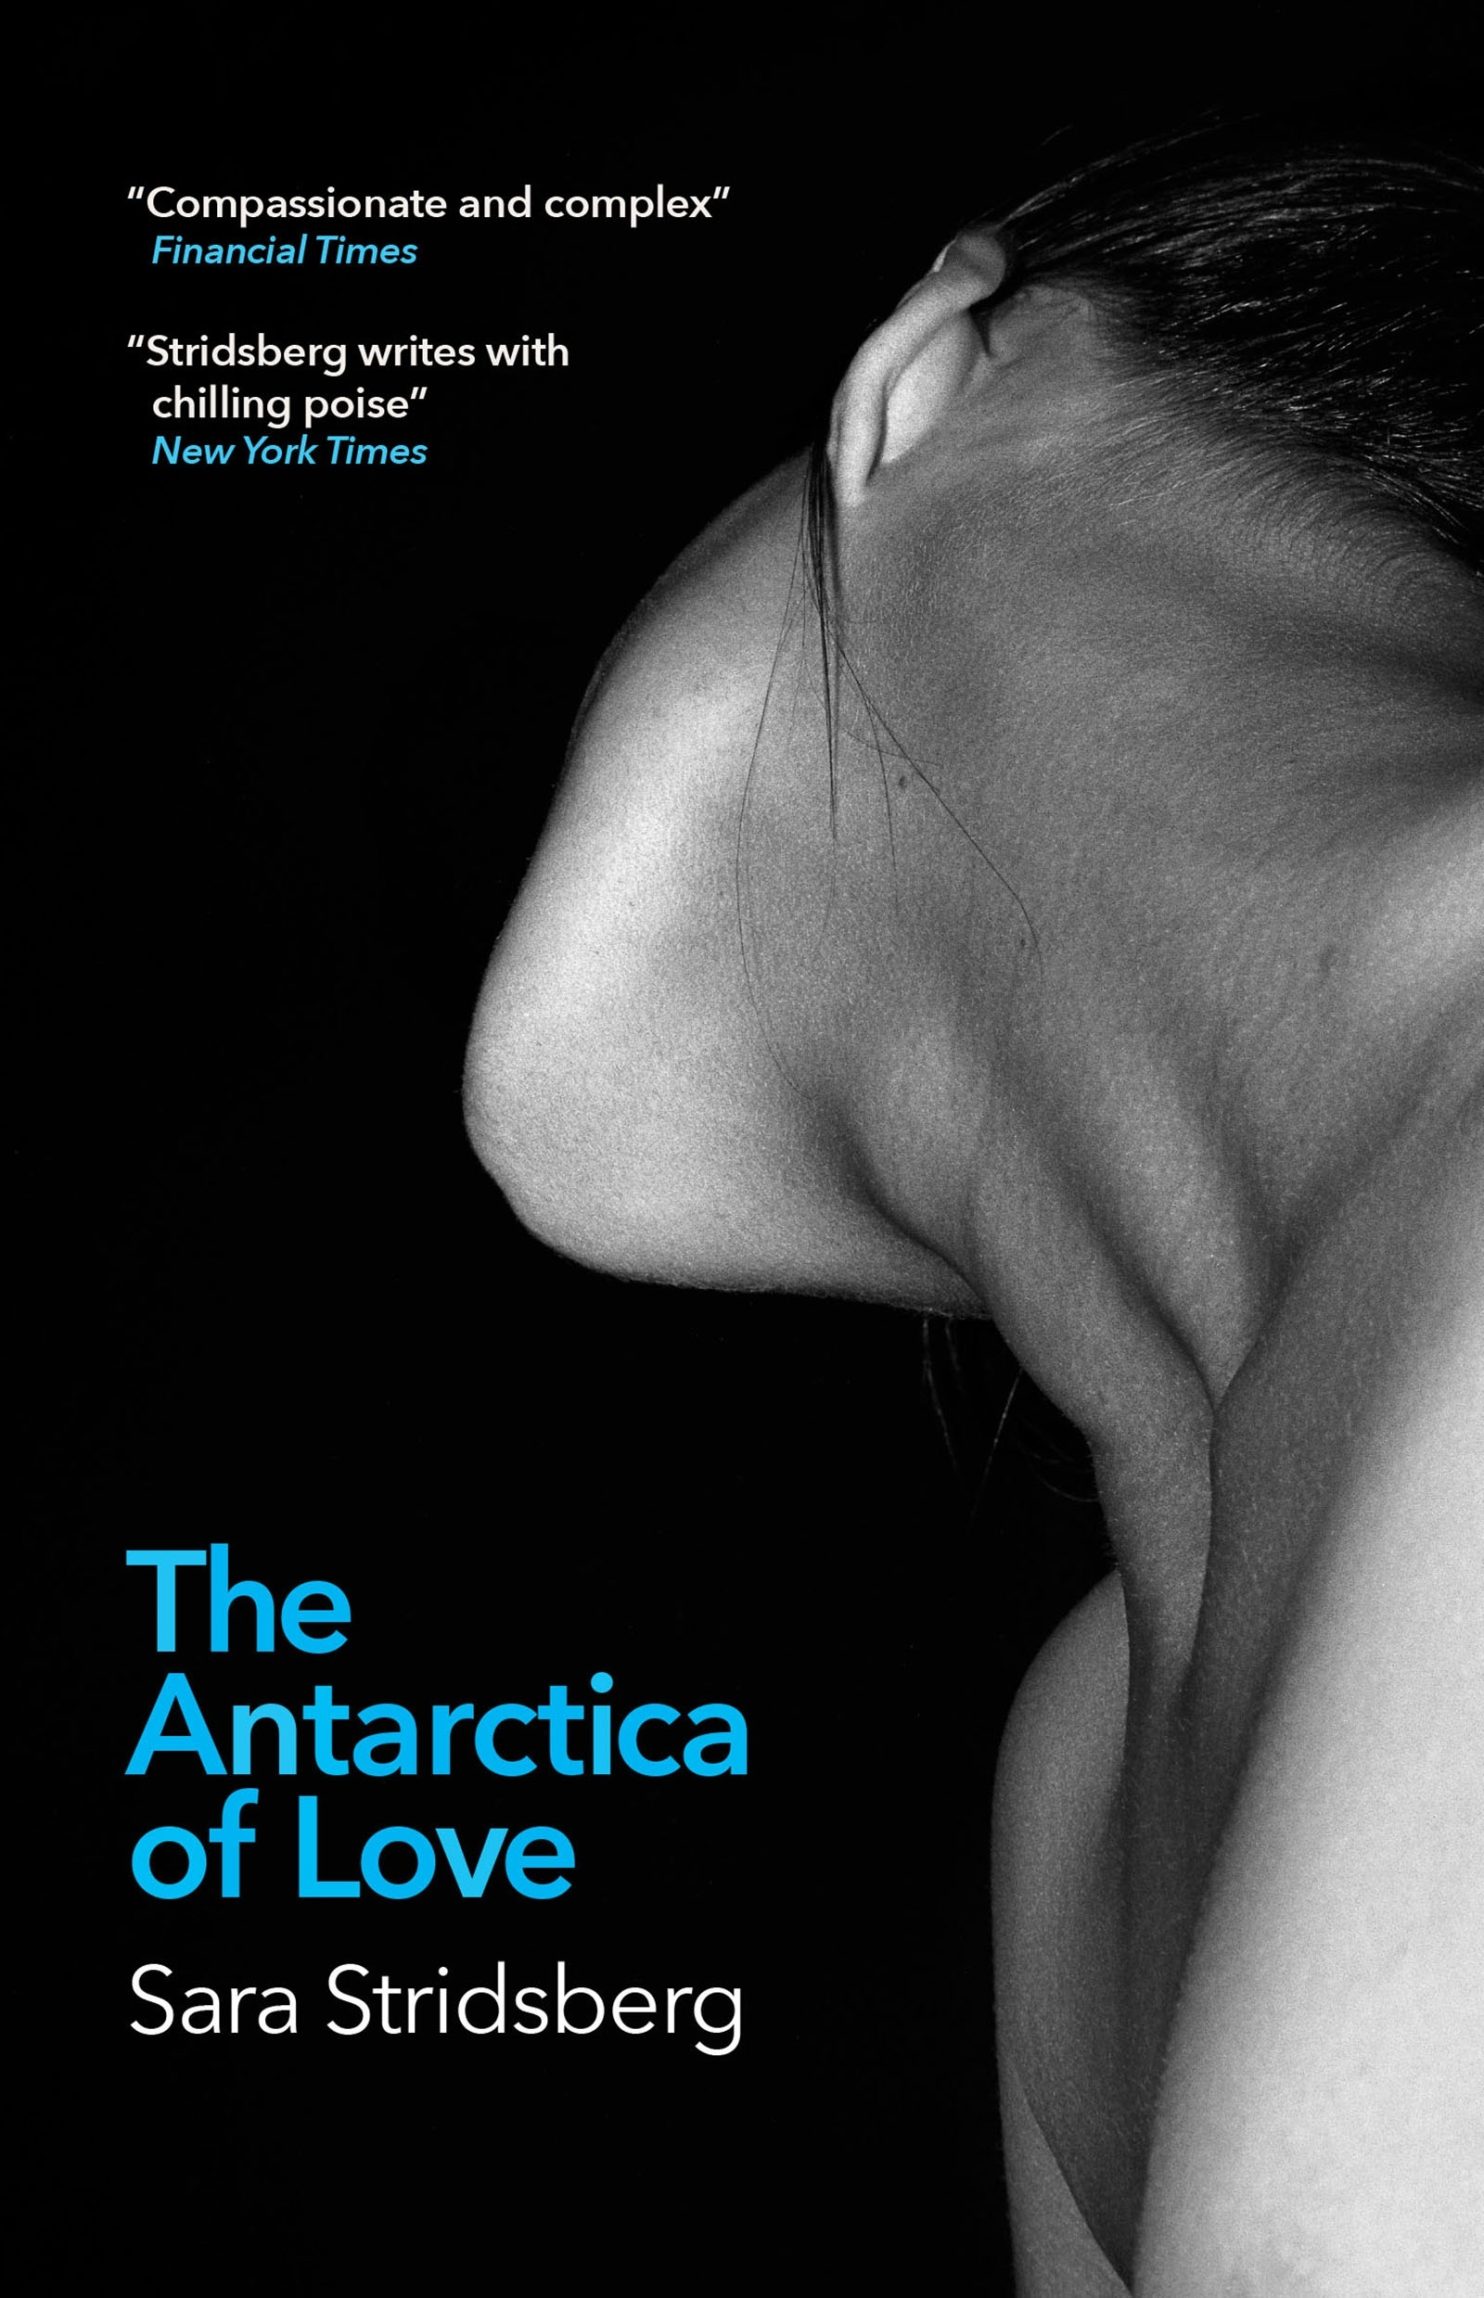 Book cover: The Antarctica of Love, Sara Stridsberg